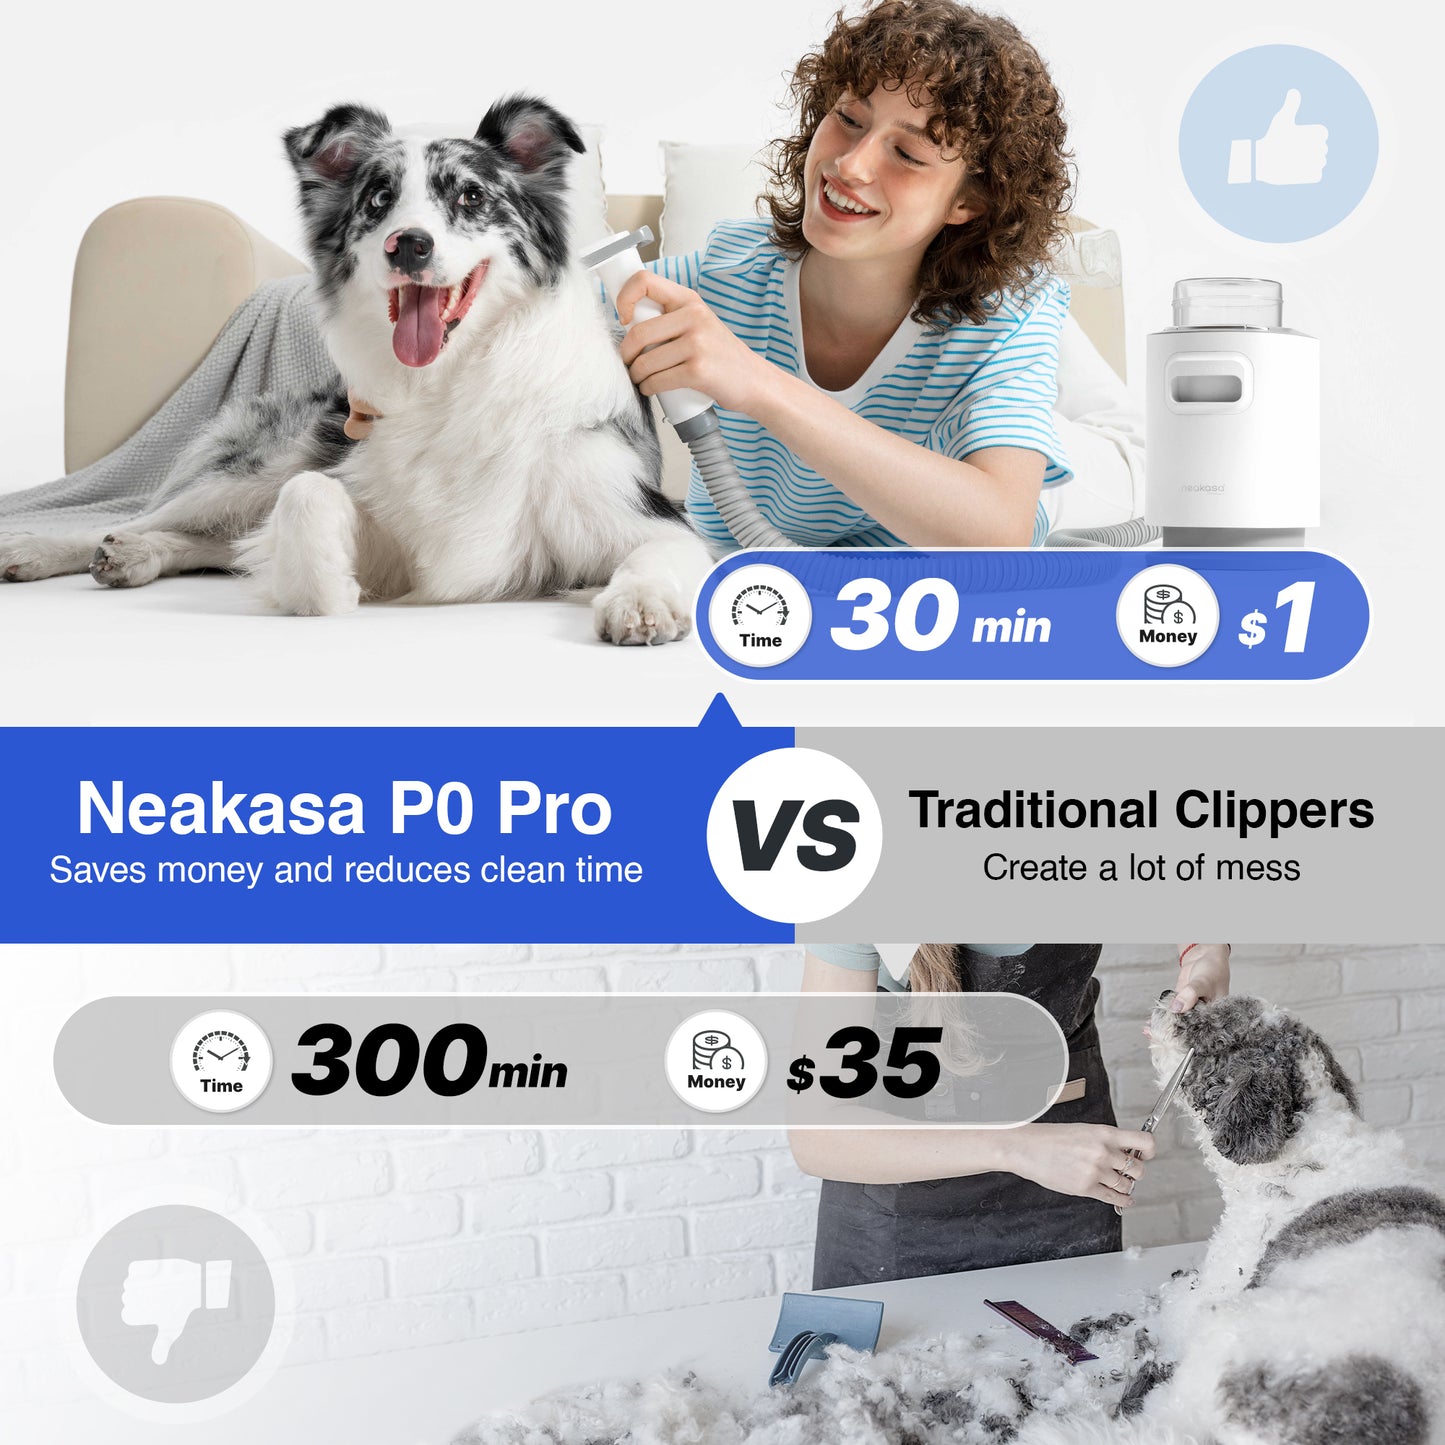 Neakasa P0 Pet Grooming System